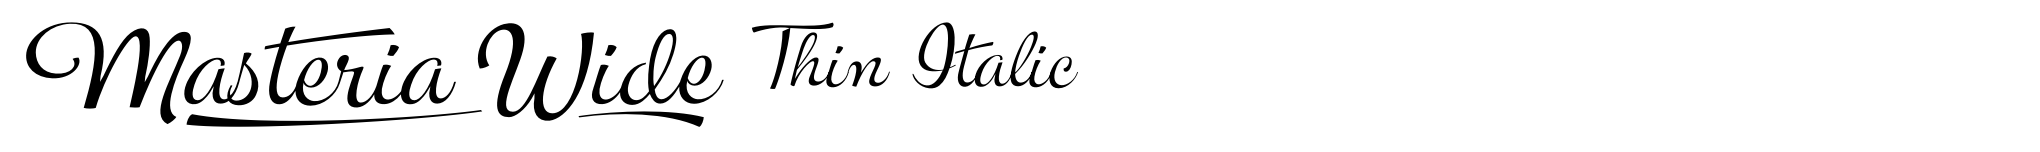 Masteria Wide Thin Italic image